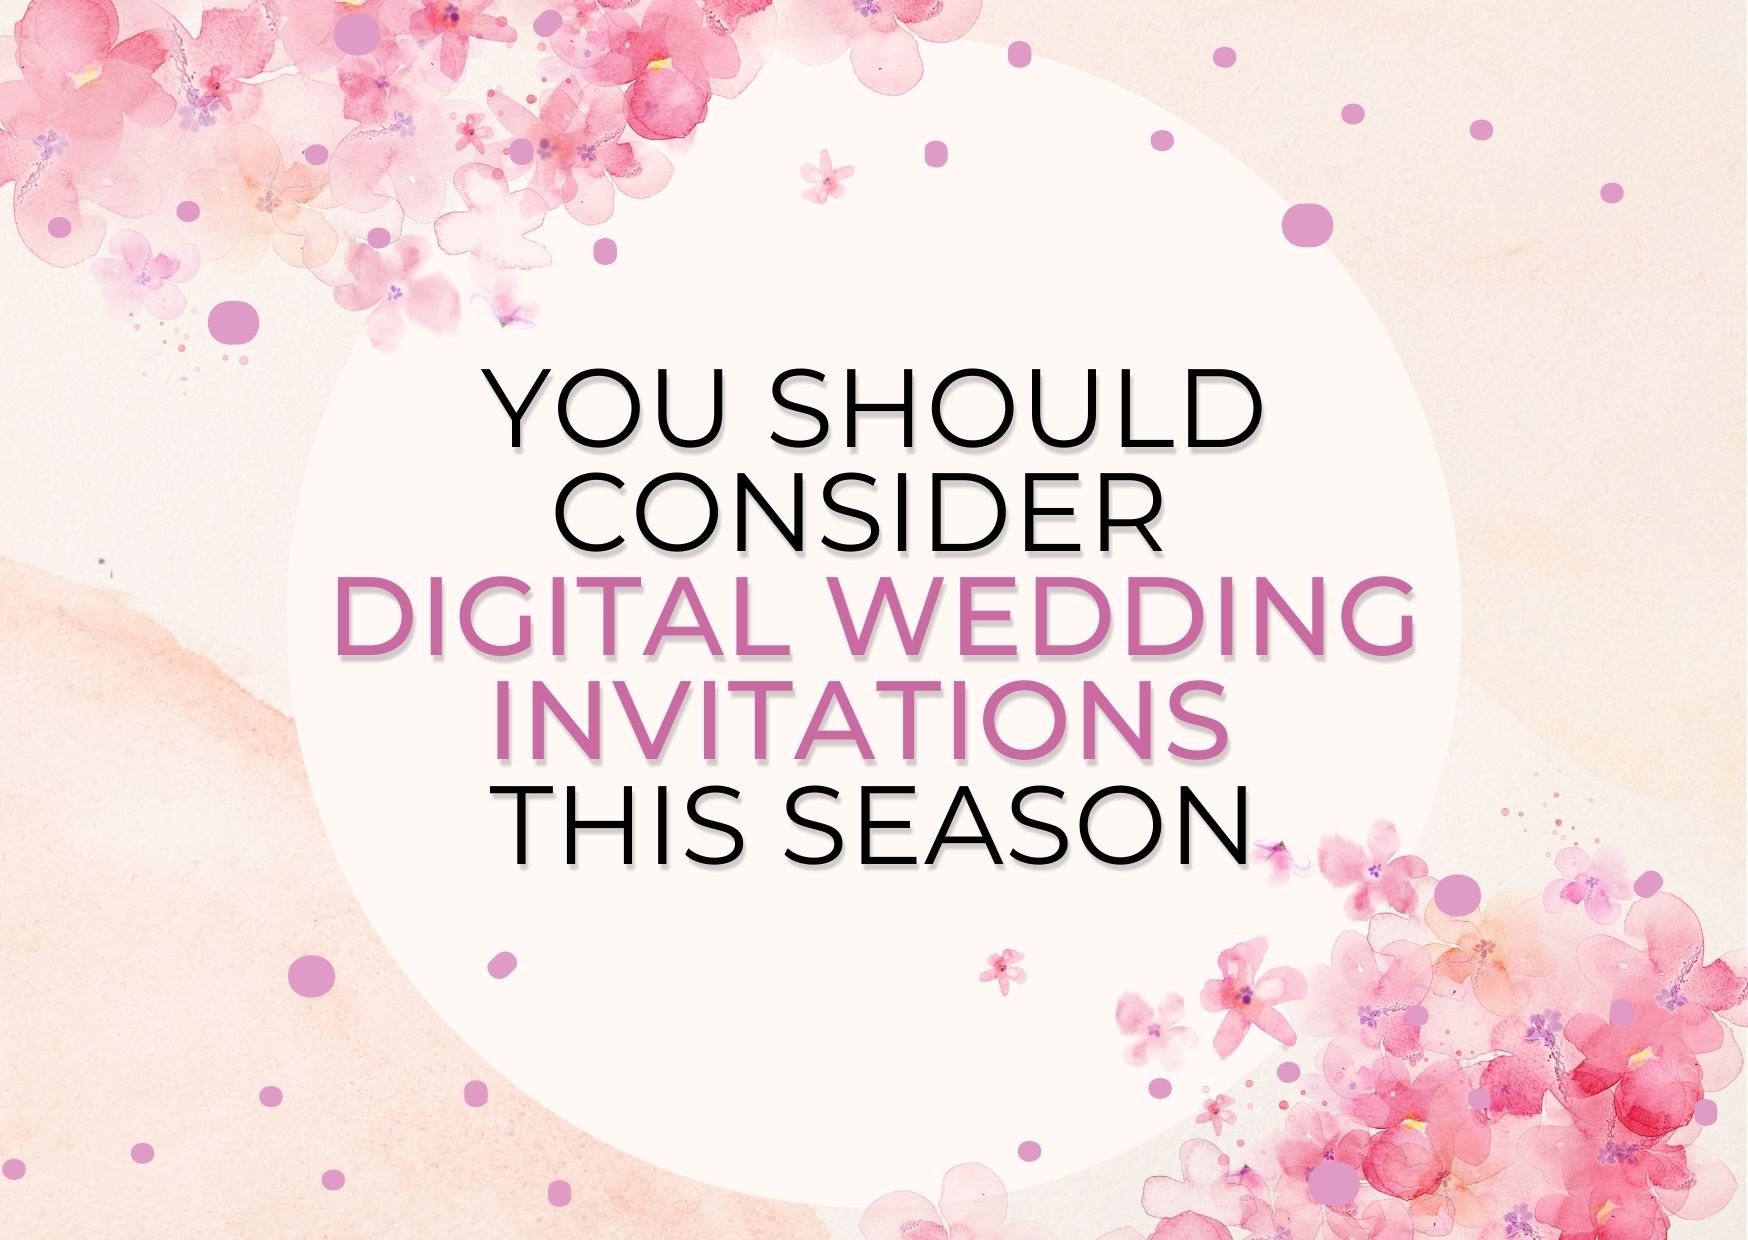 Why You Should Consider Digital Wedding Invitations This Season?